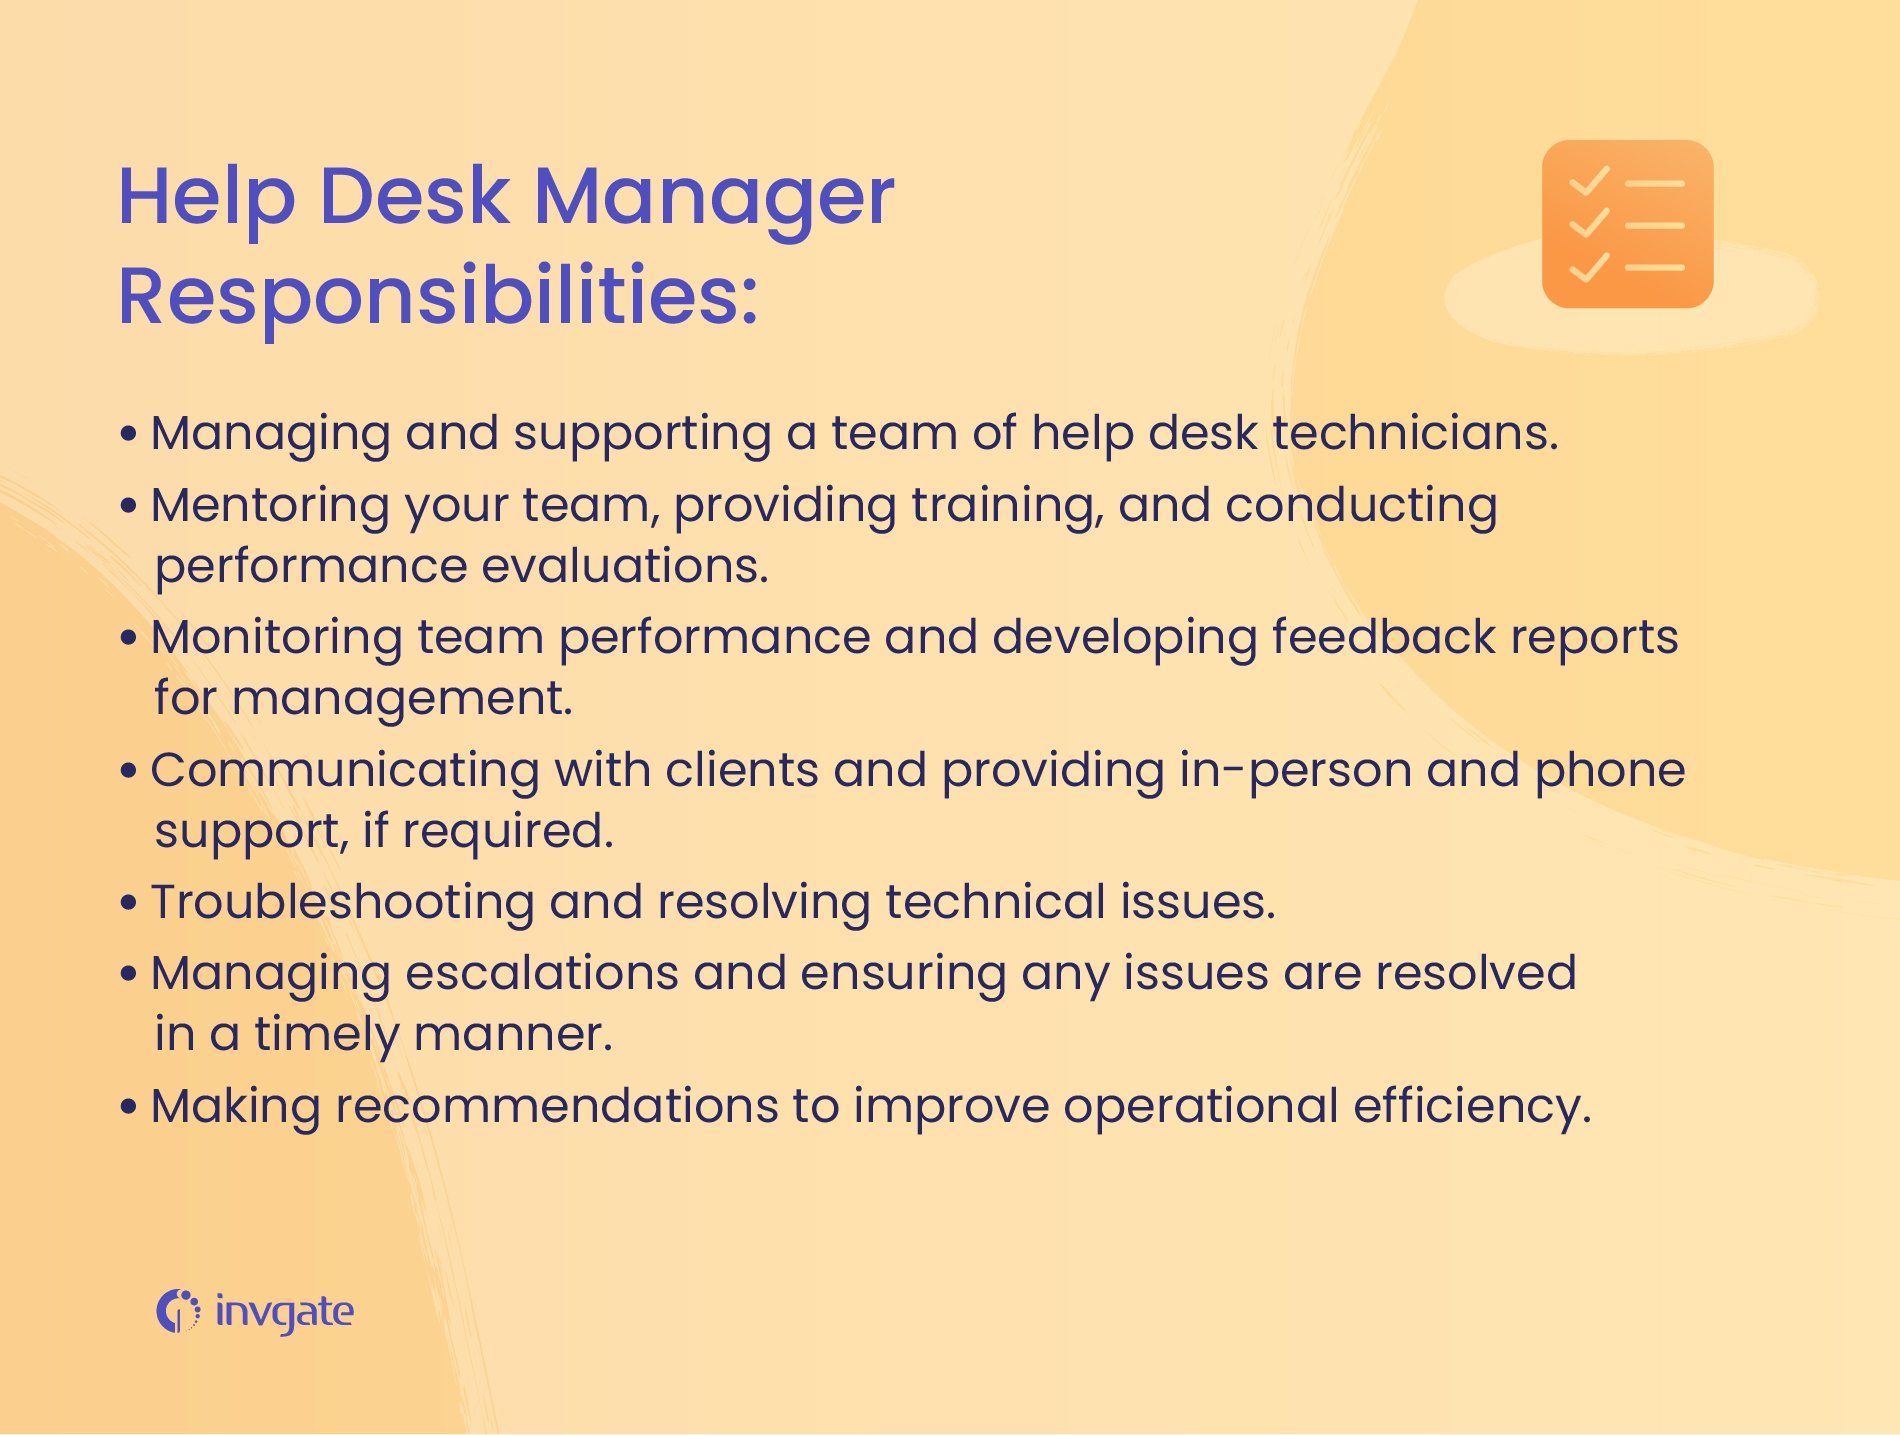 Help desk manager responsibilities